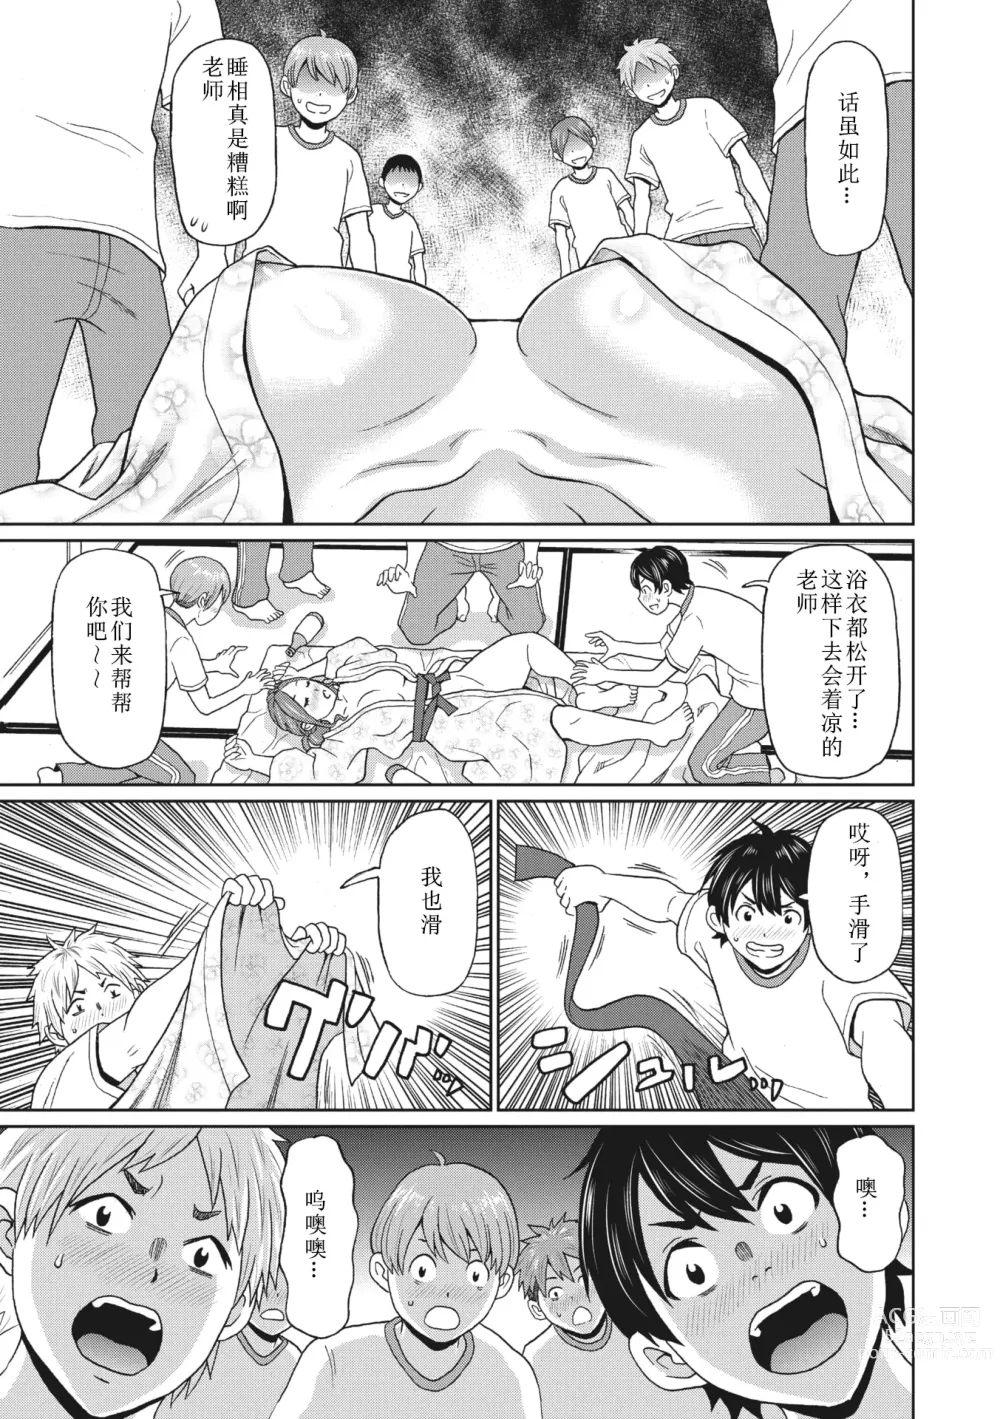 Page 5 of manga Yoidore Spartan